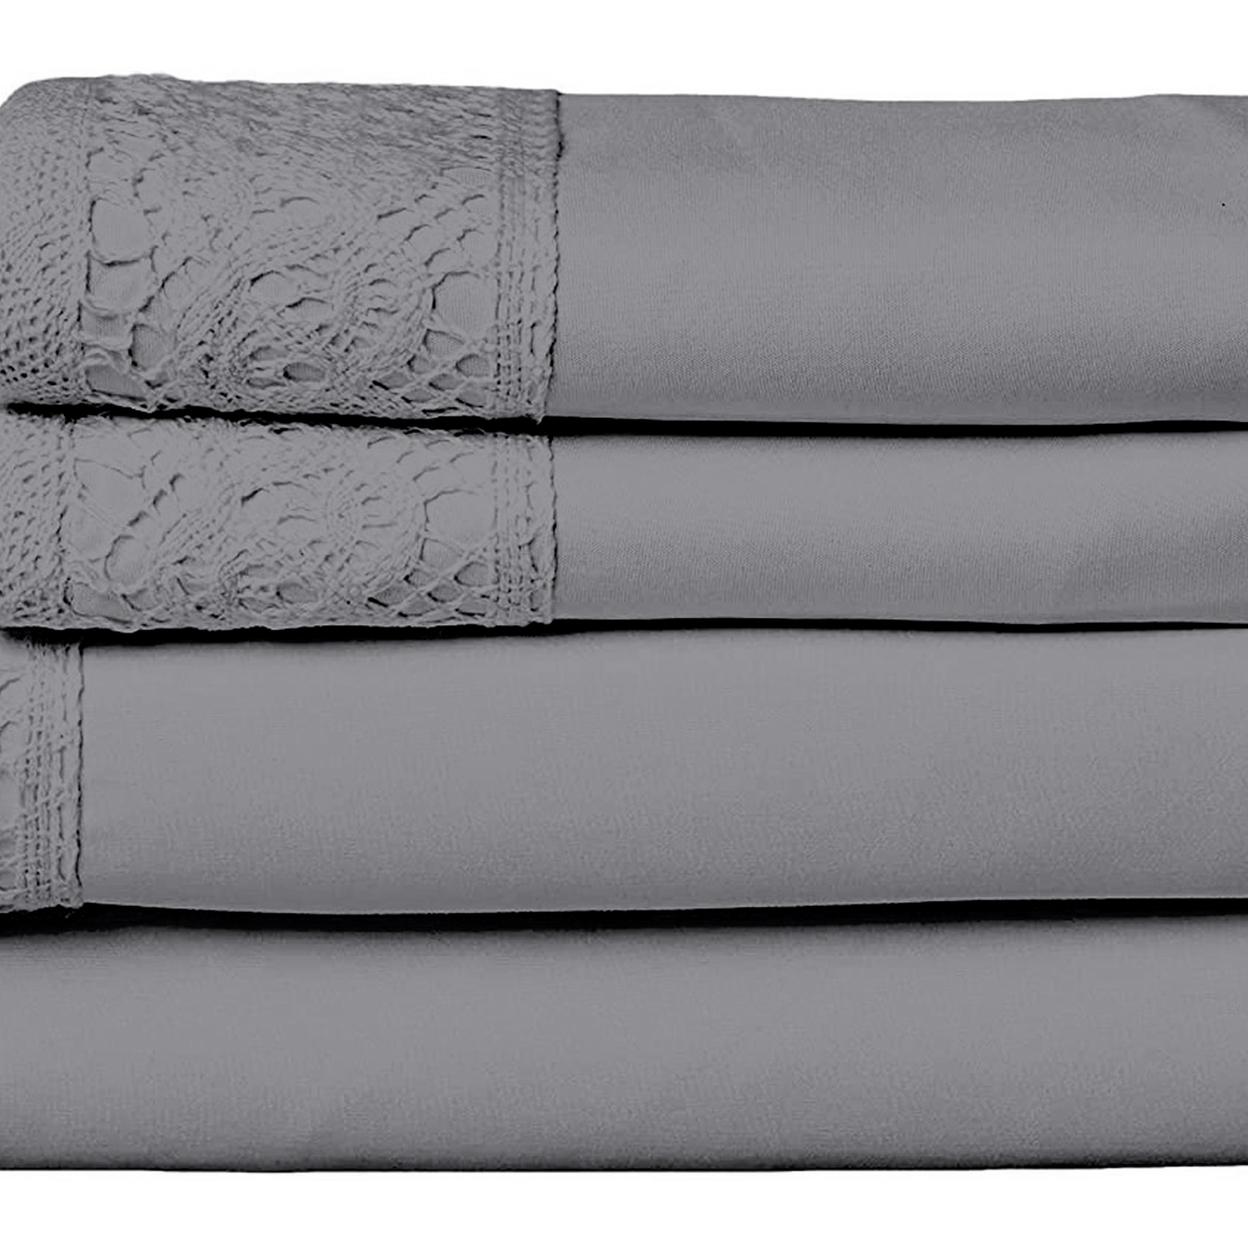 Edra 4 Piece Microfiber King Size Bed Sheet Set With Crochet Lace, Gray- Saltoro Sherpi